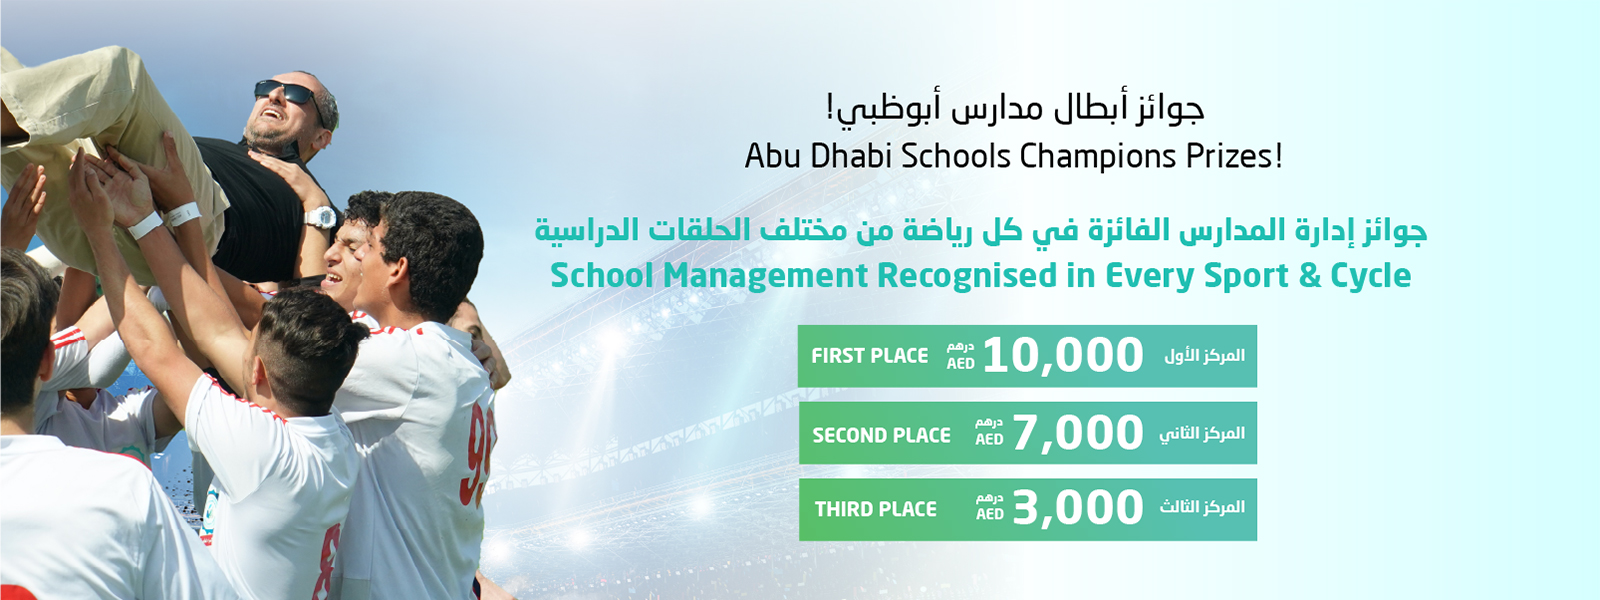 Abu Dhabi School Champions